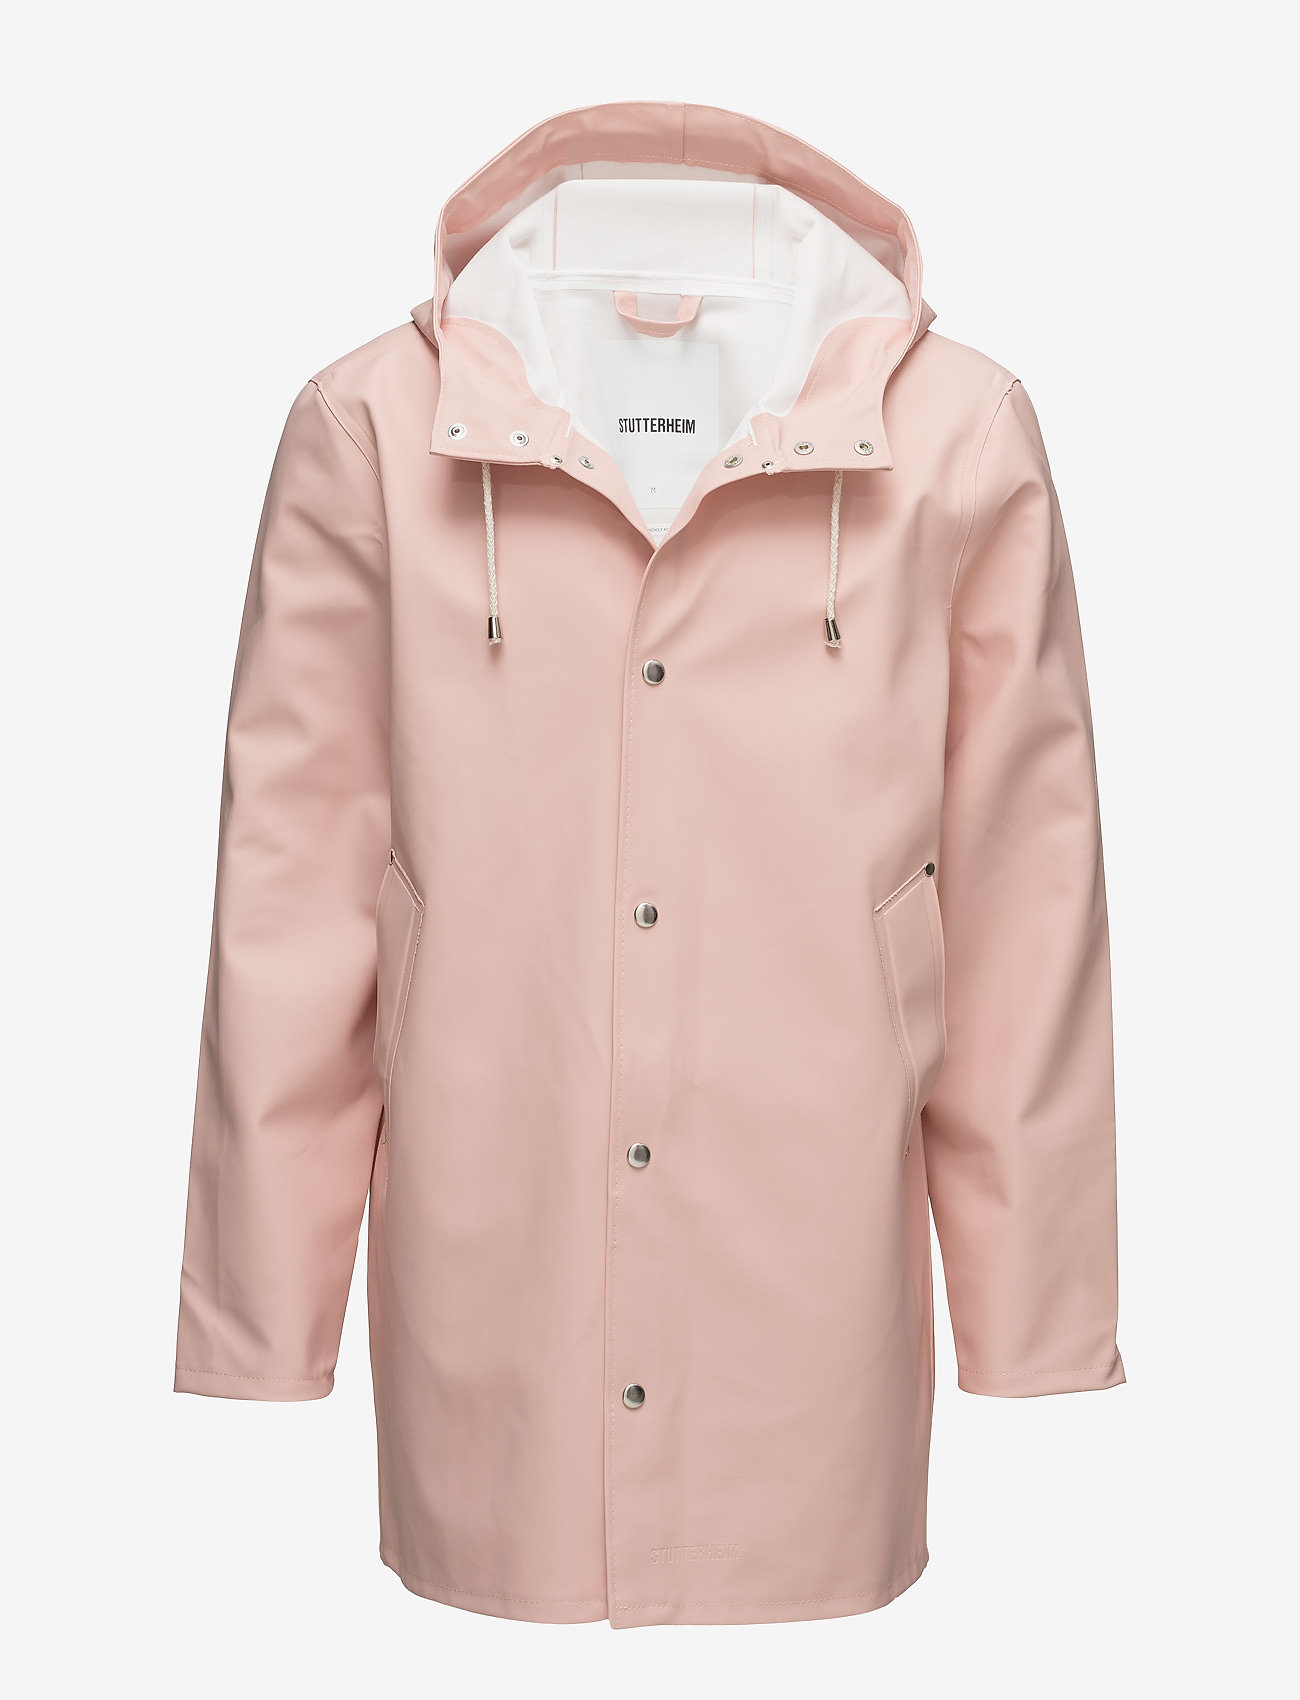 Stutterheim - Stockholm - spring jackets - pale pink - 0